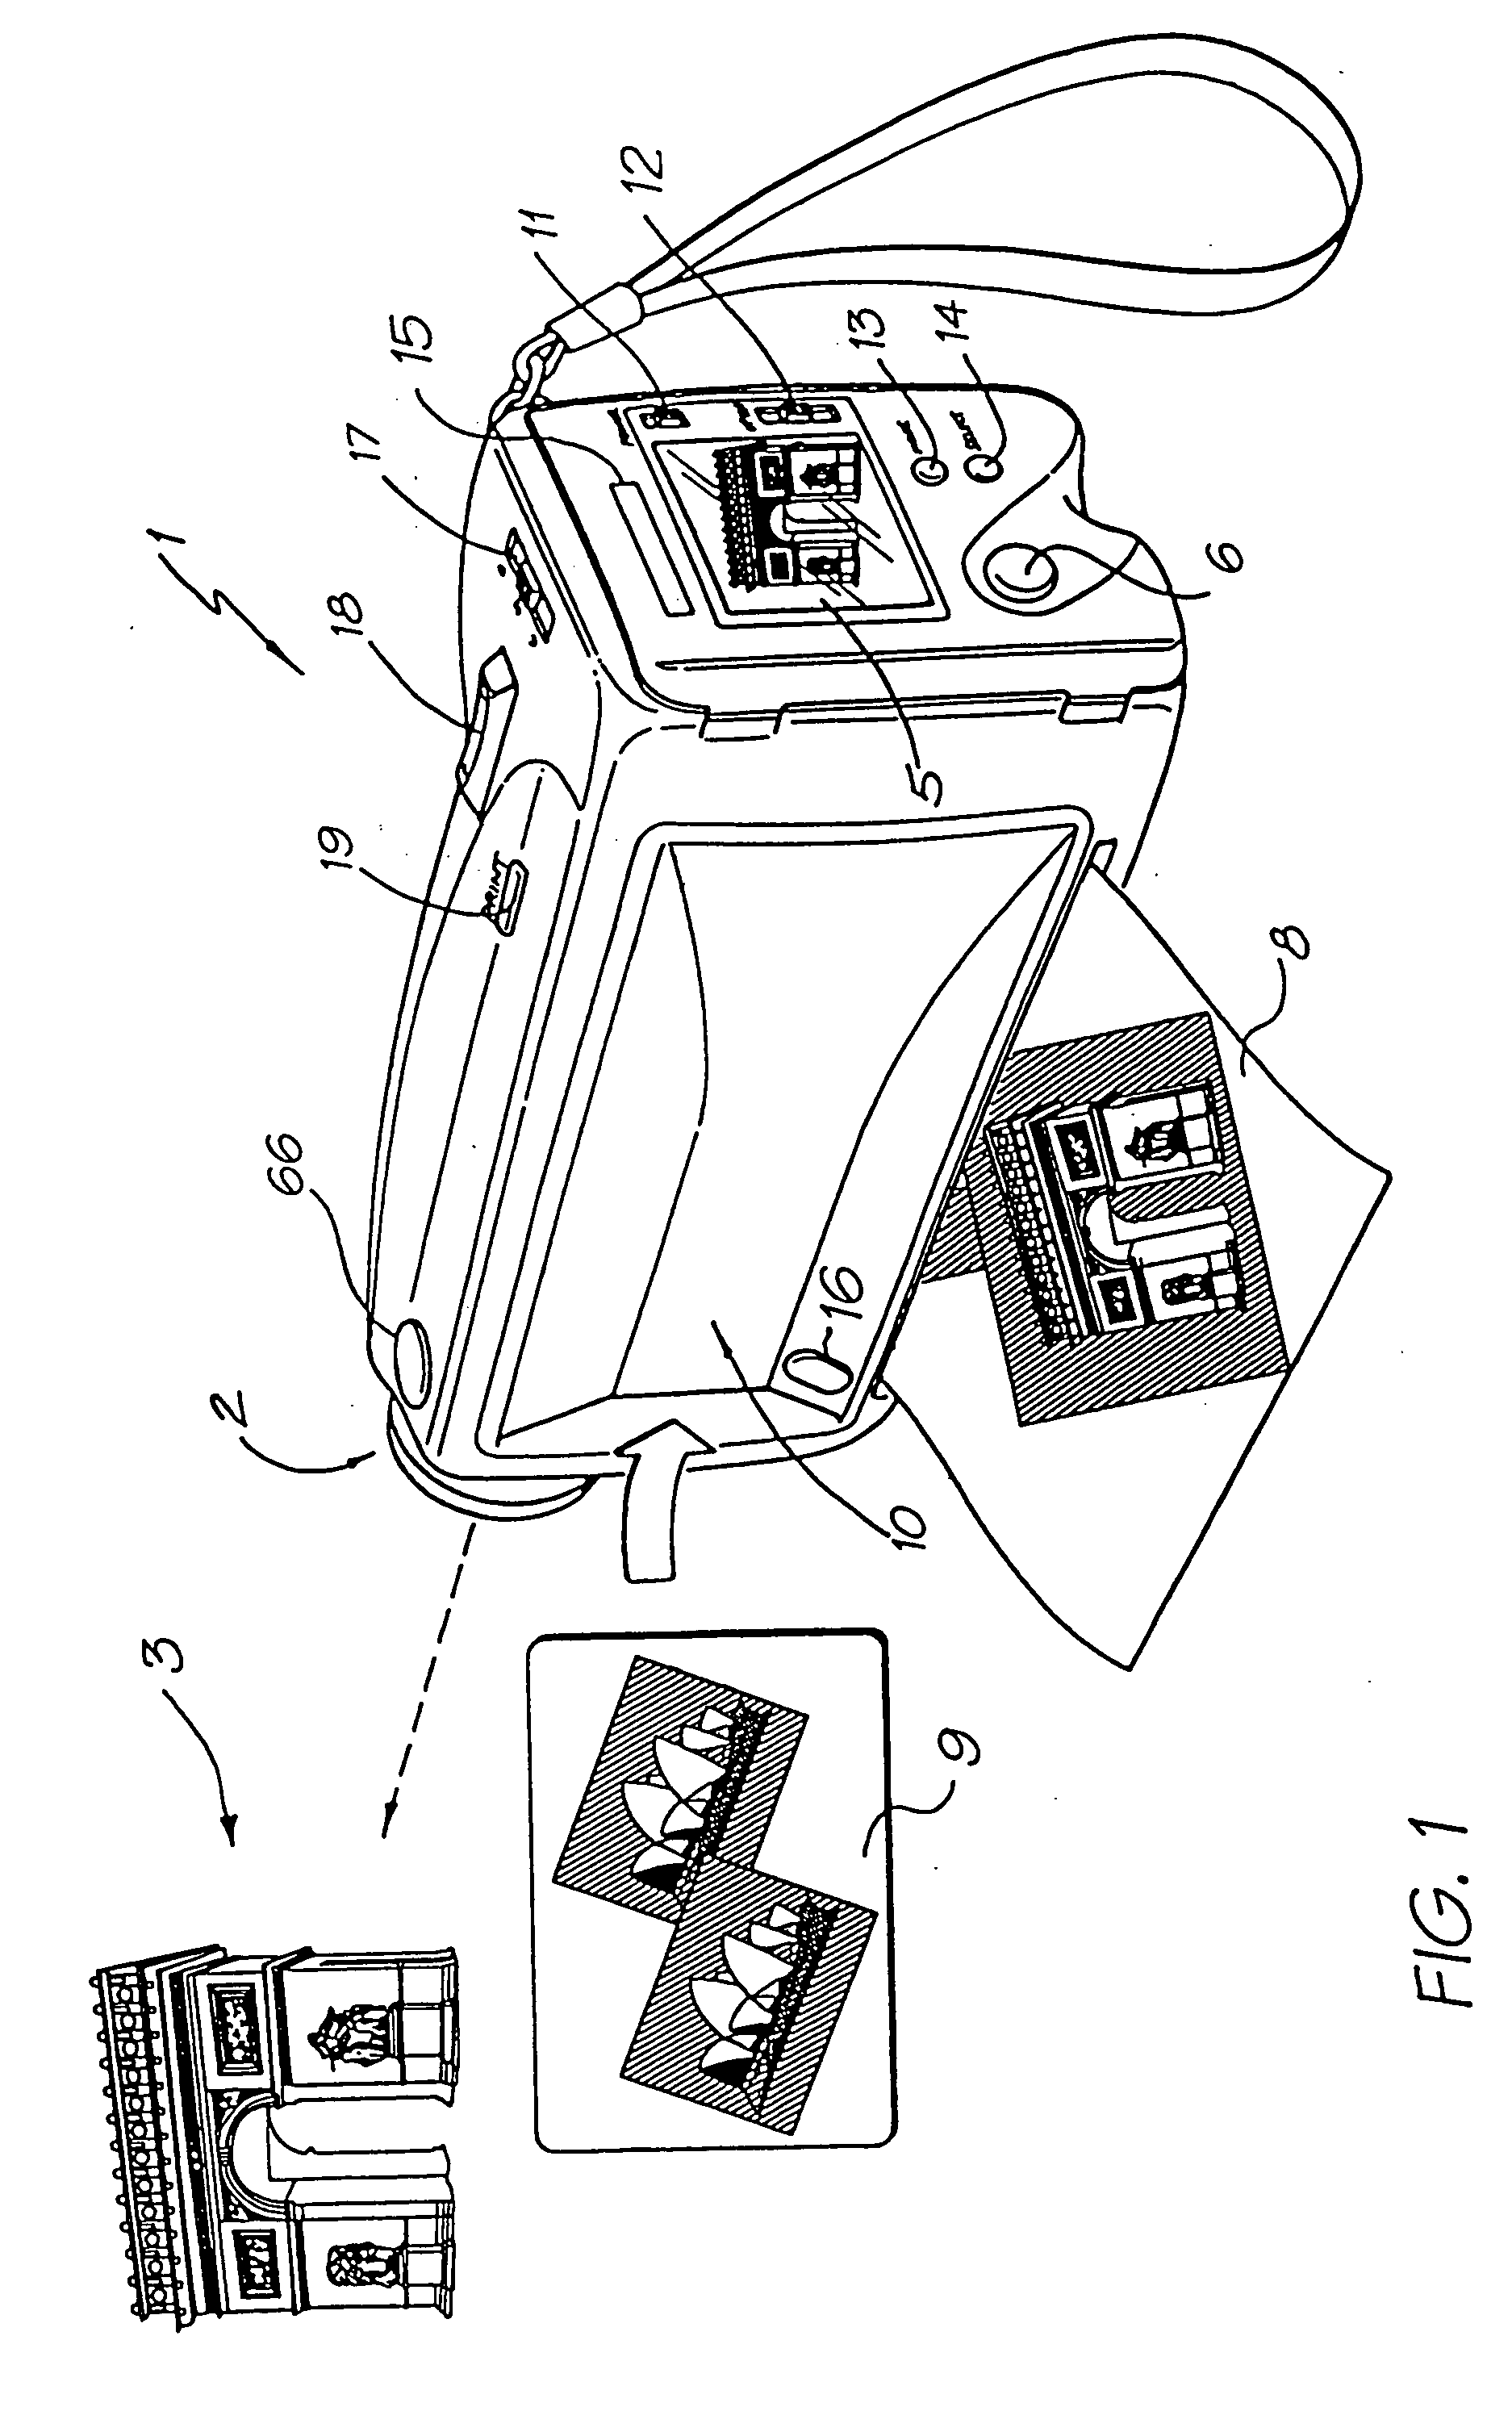 Portable camera with inbuilt printer device